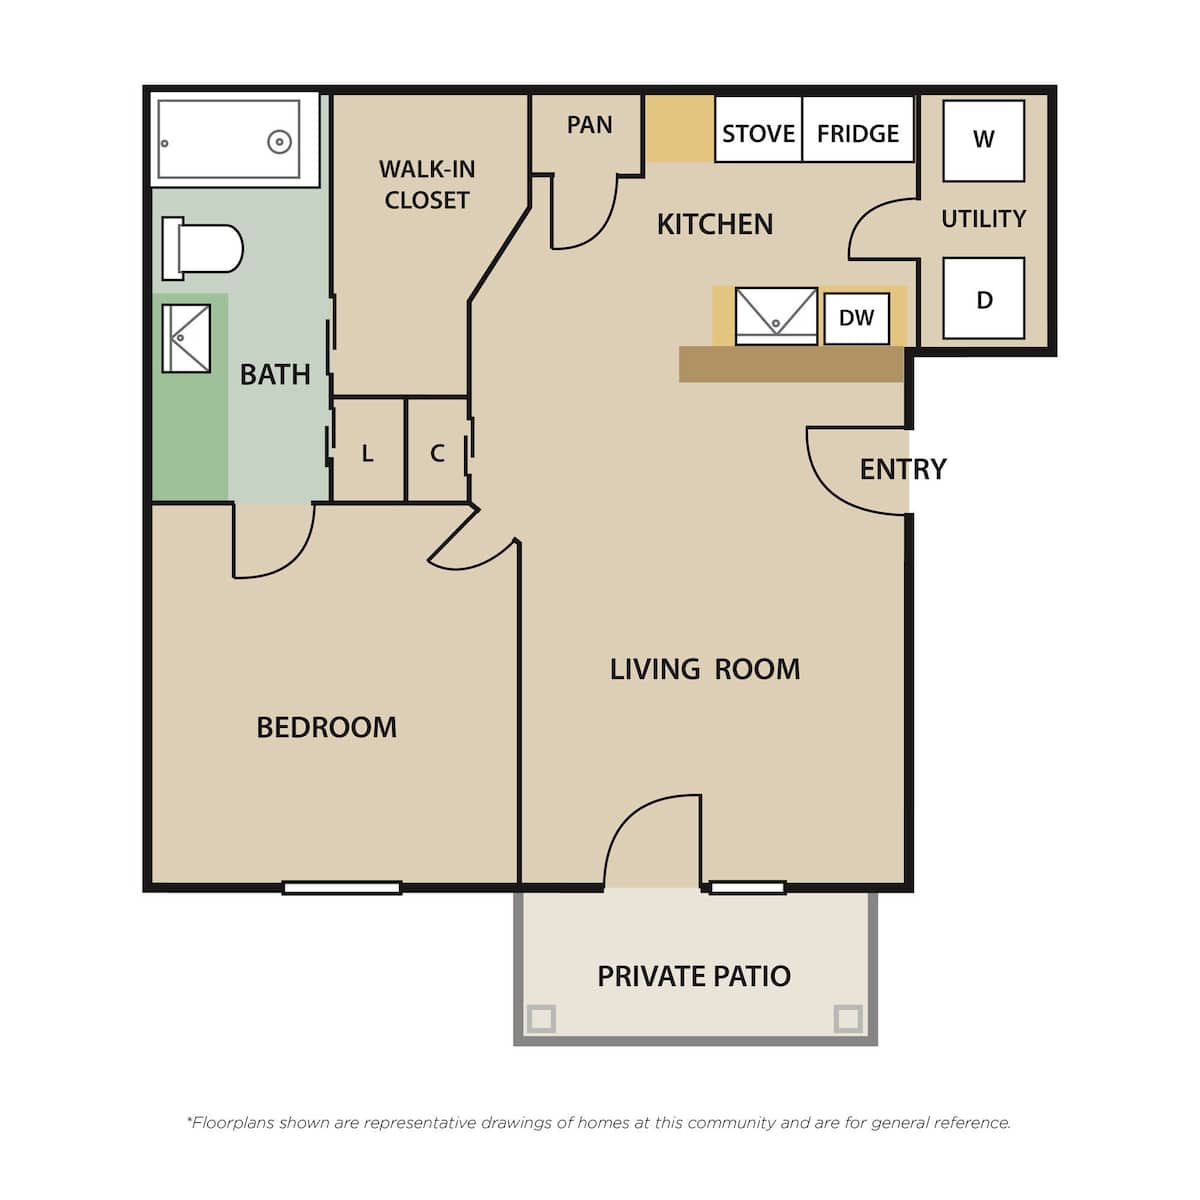 Floorplan diagram for PARK A2, showing 1 bedroom